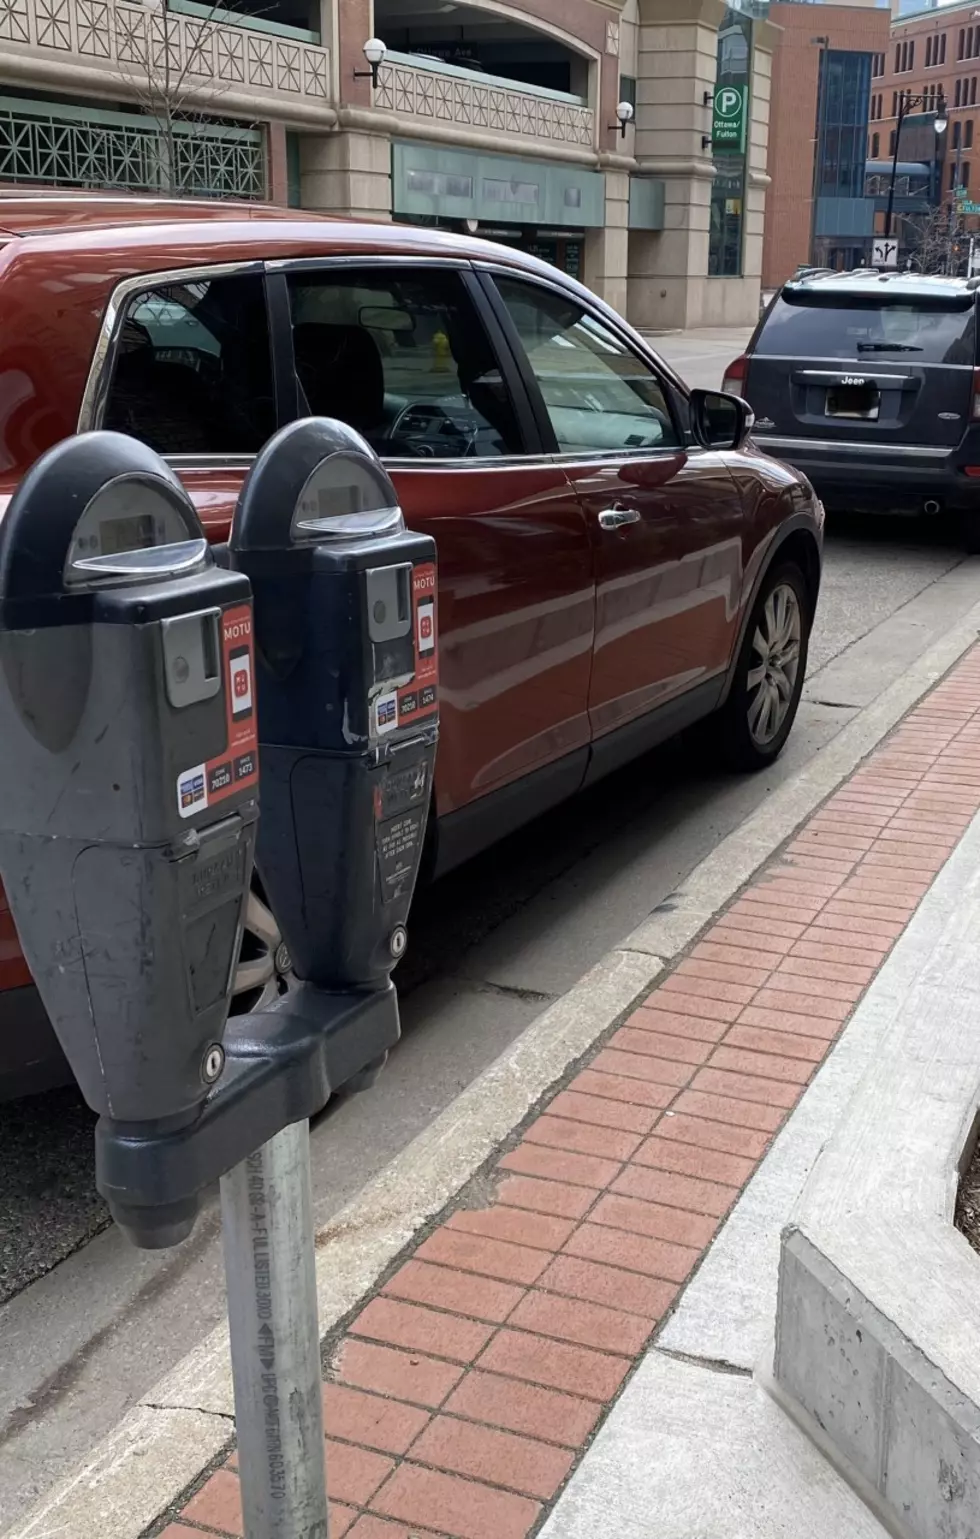 City of GR Temporarily Suspends Metered Parking Enforcement